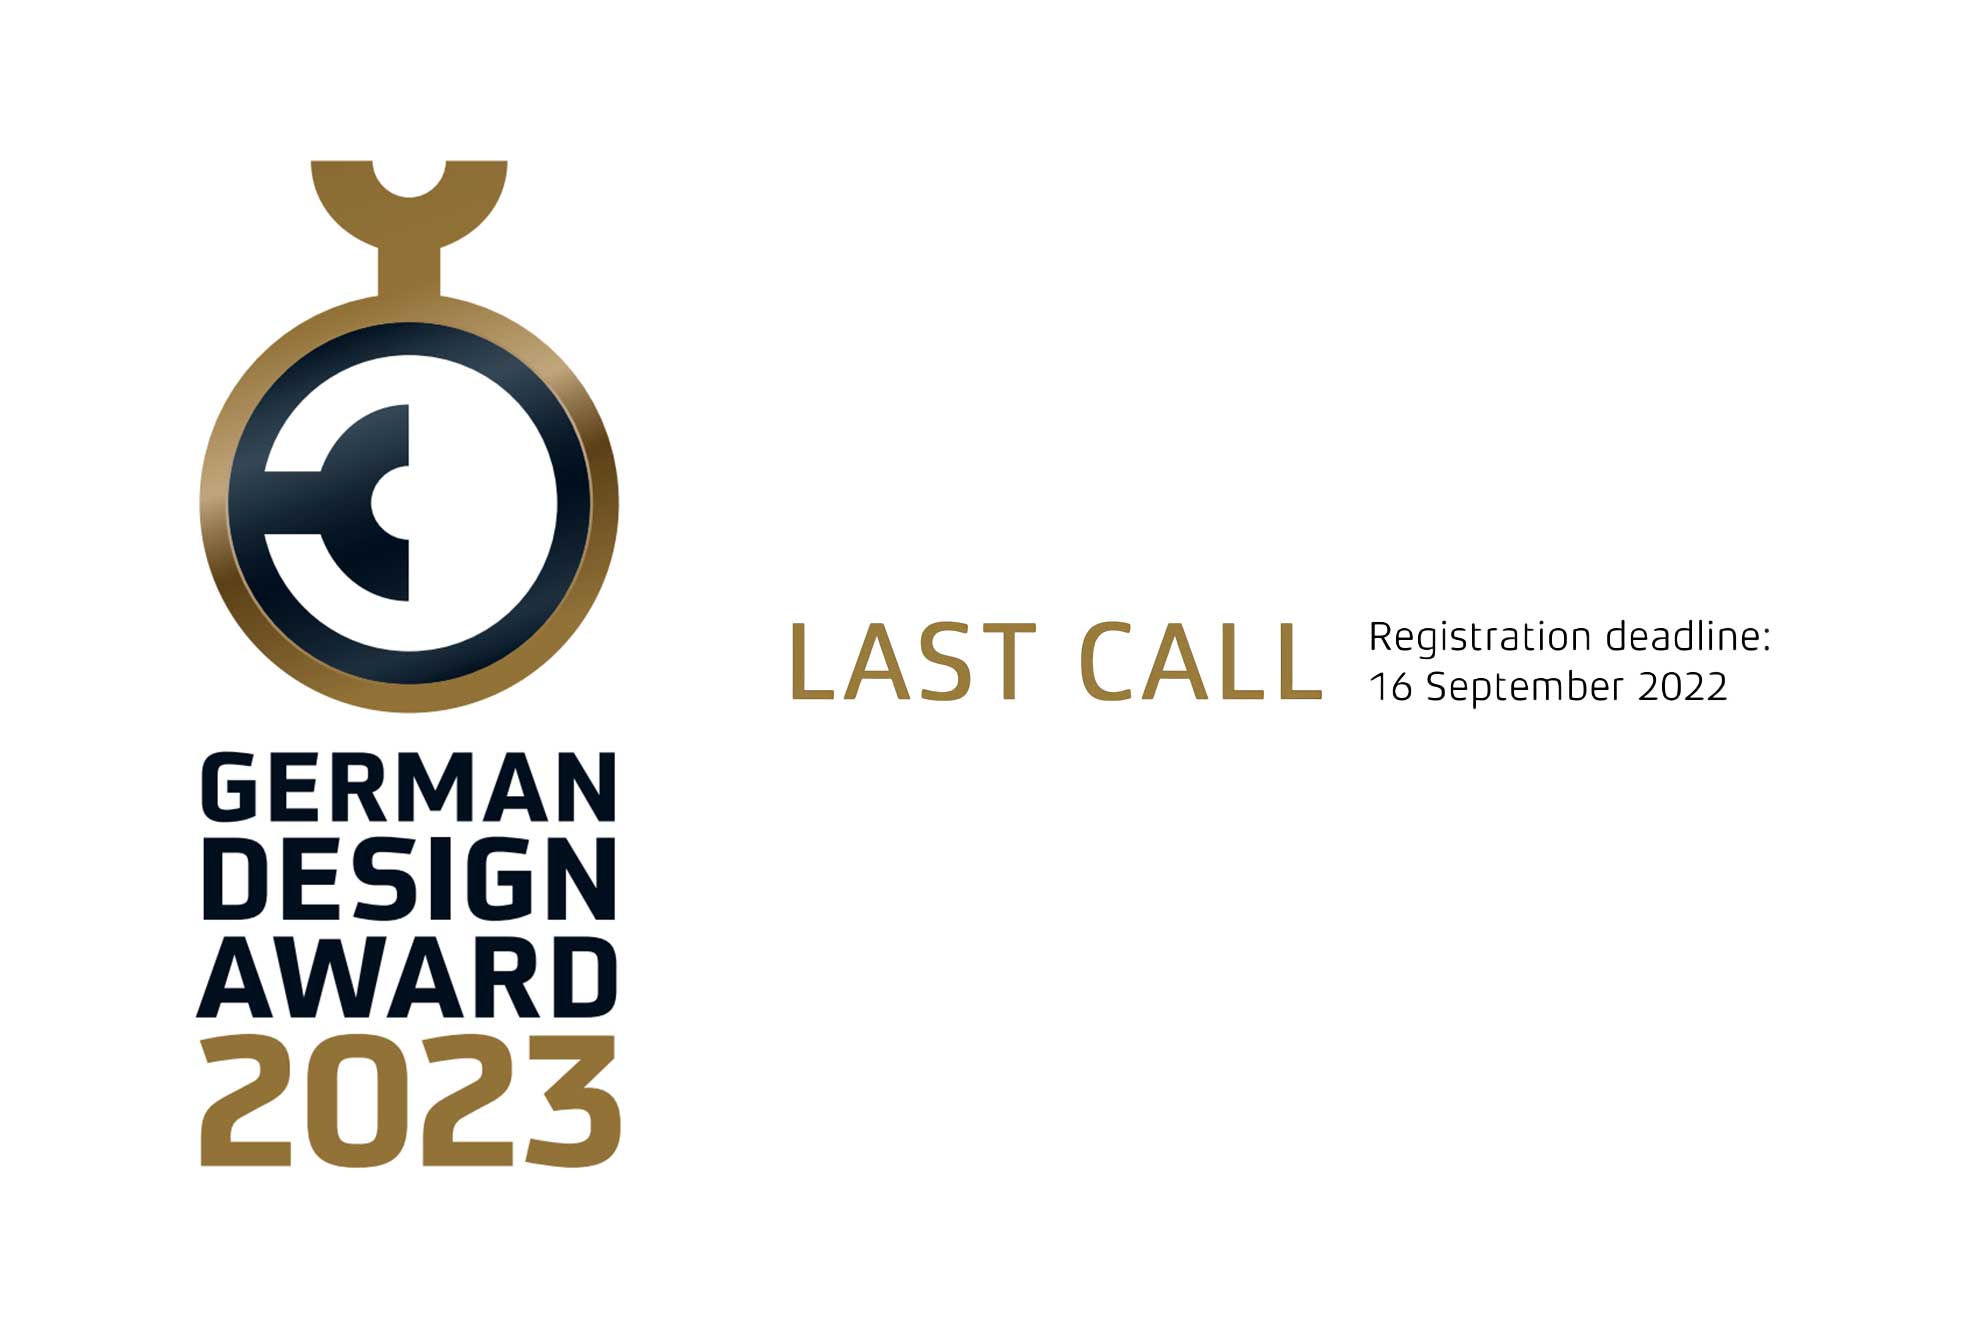 German Design Award 2023 